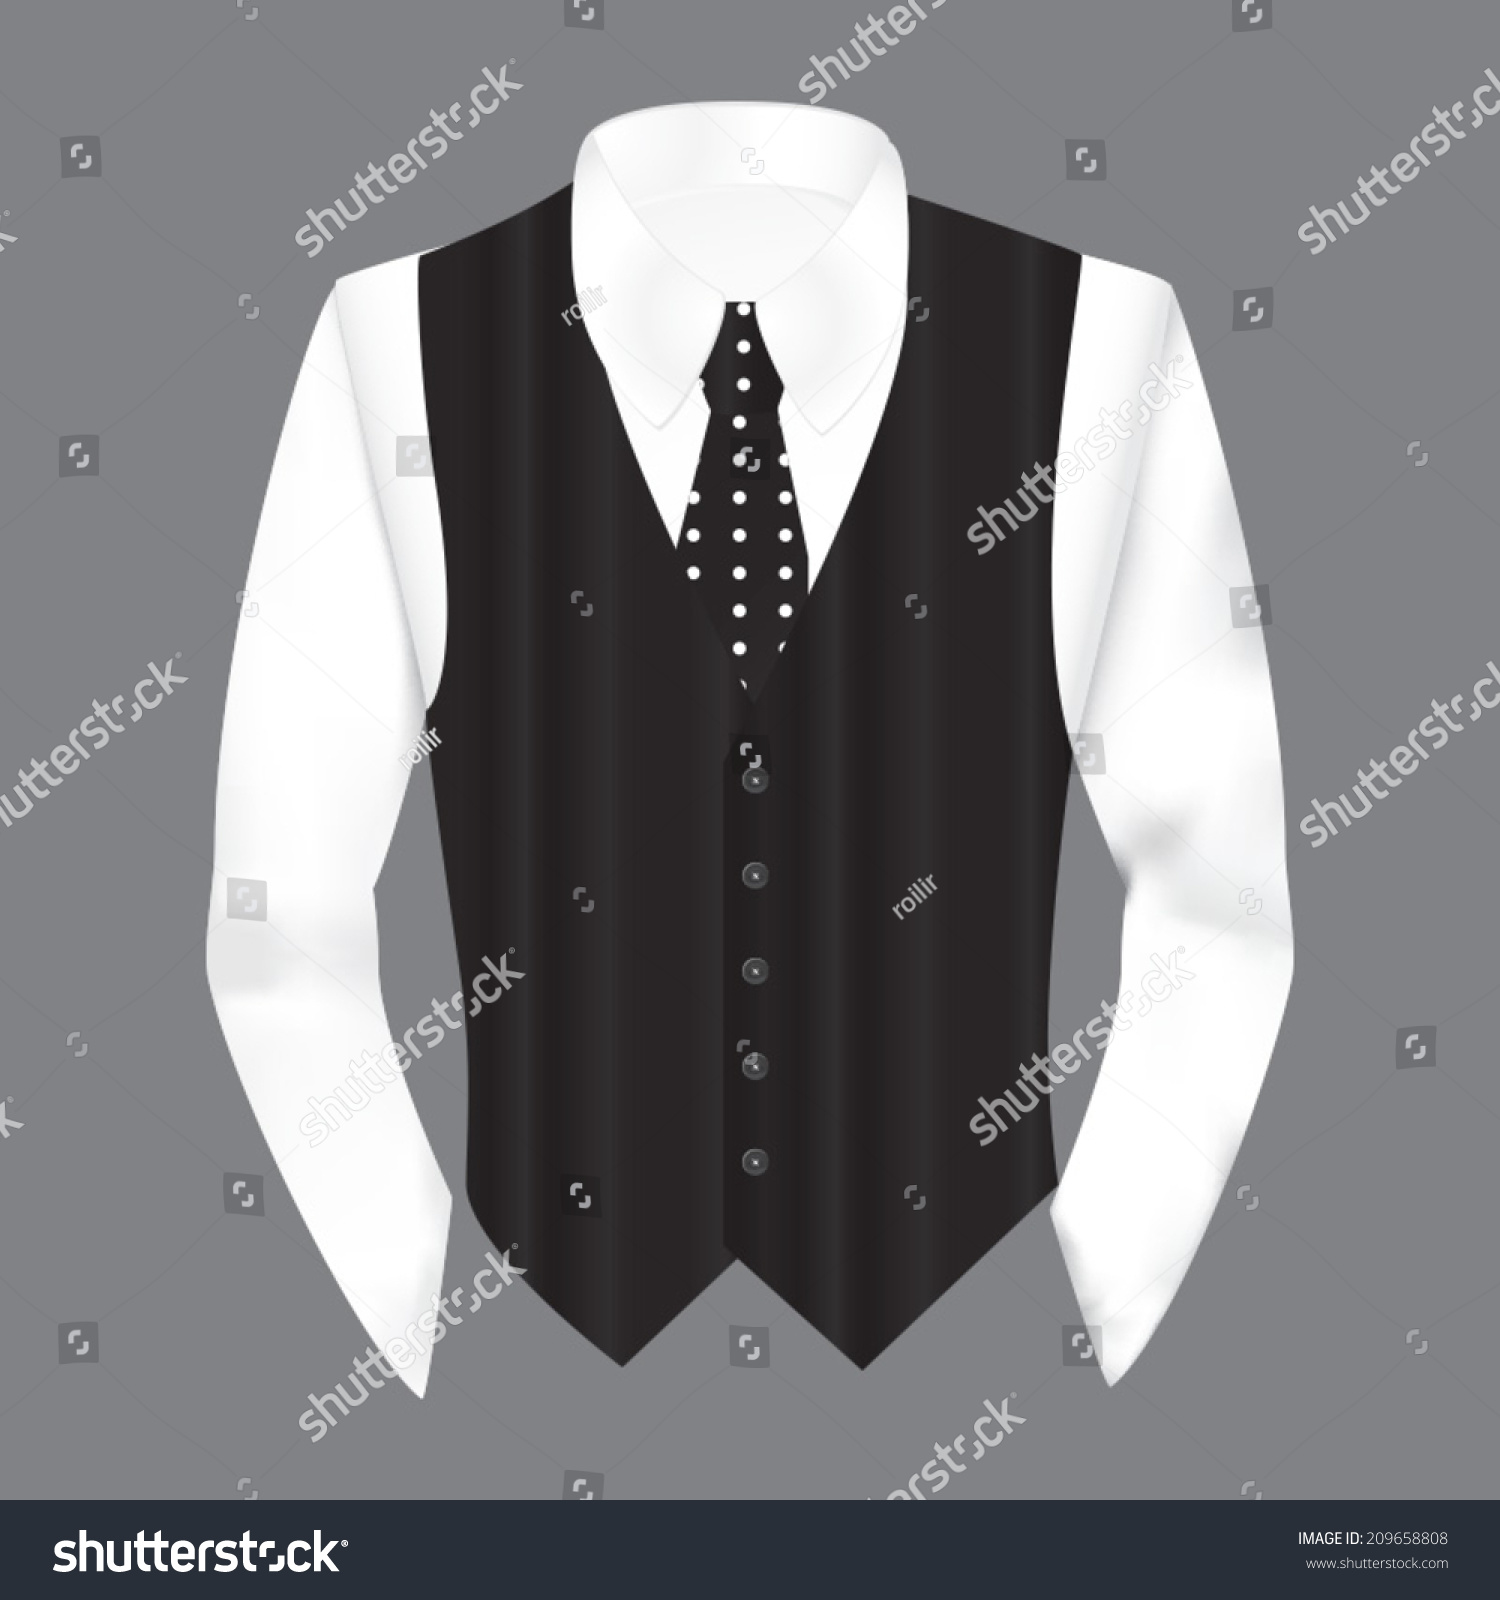 Vest Shirt Tie Business Style Vector Stock Vector